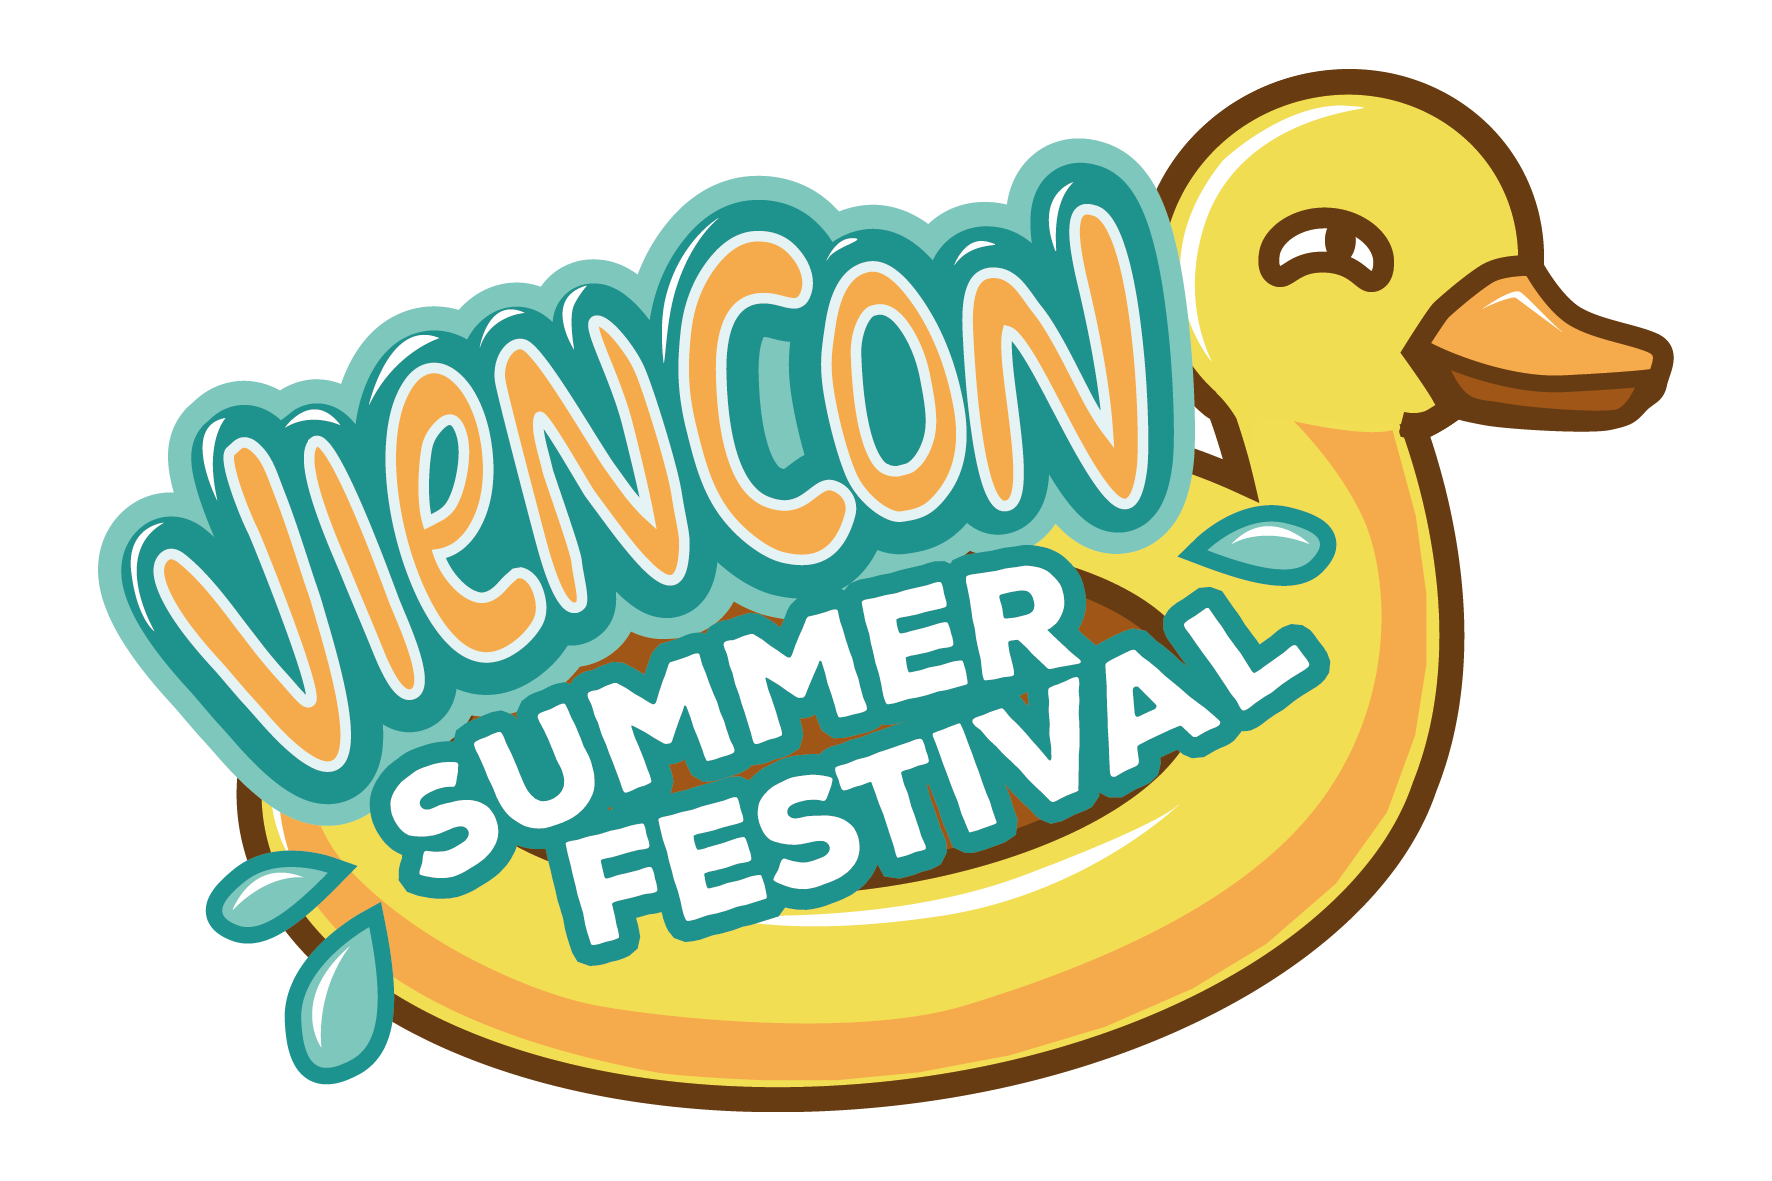 Viencon Summer Festival